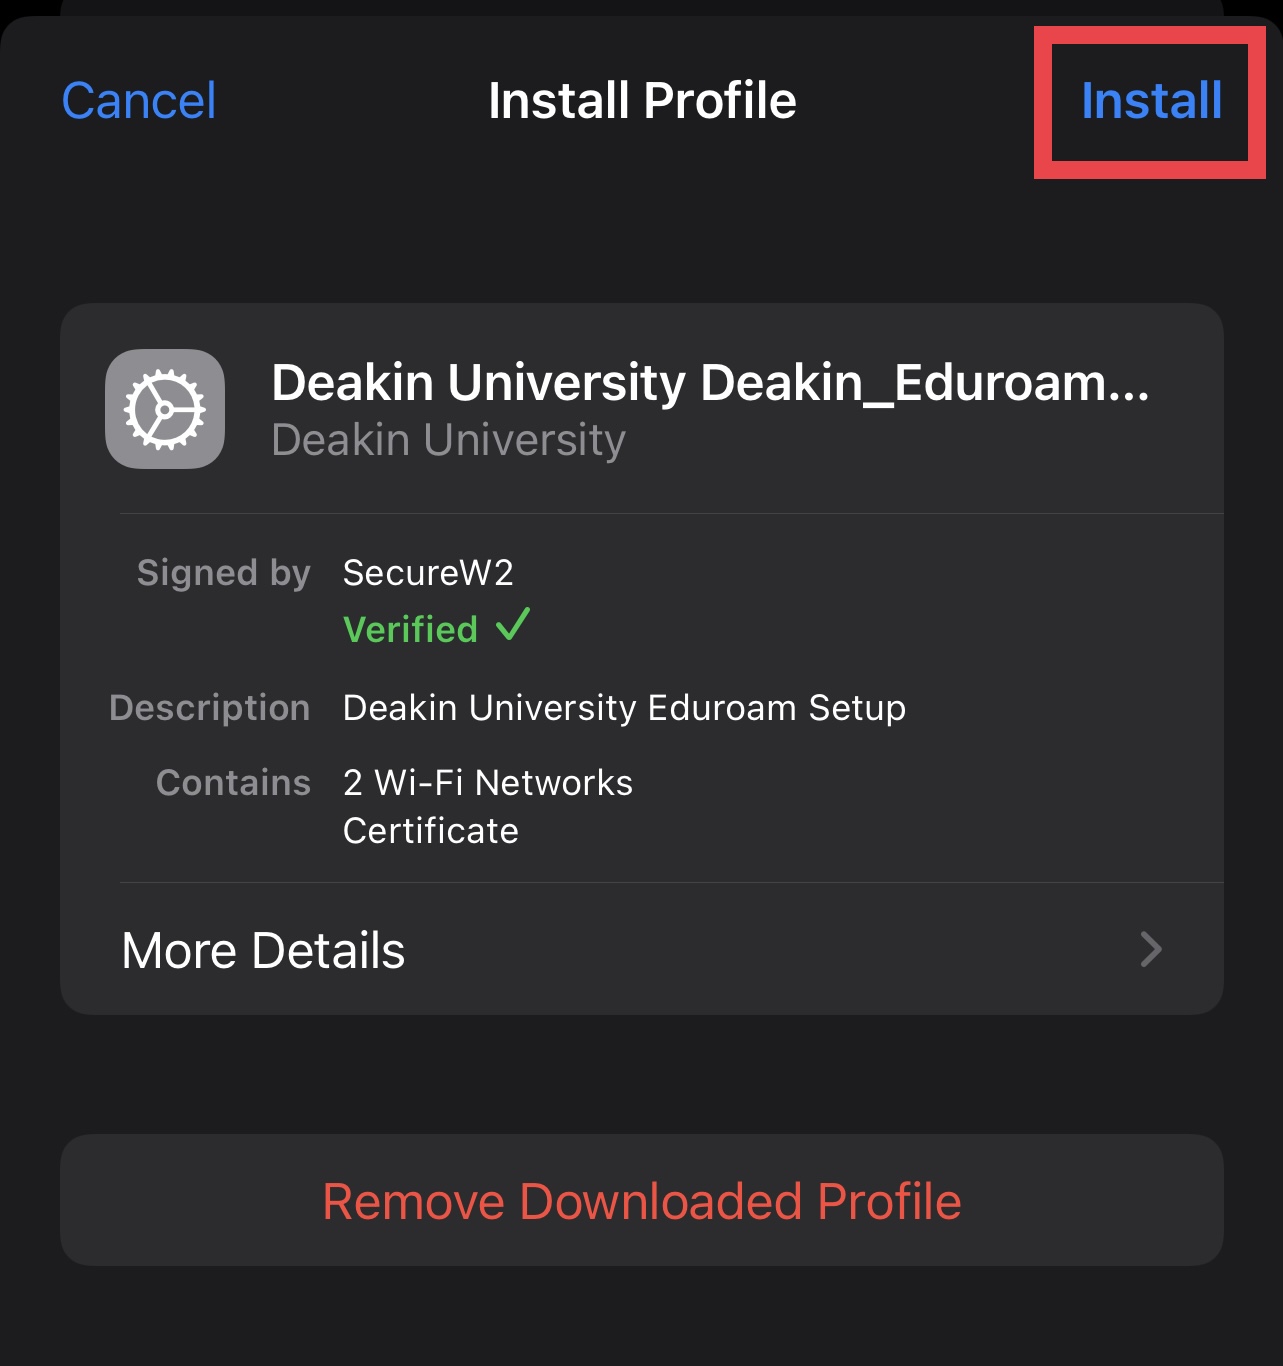 Install Profile for Deakin University Deakin_Eduroam popup, Install button outlined in red